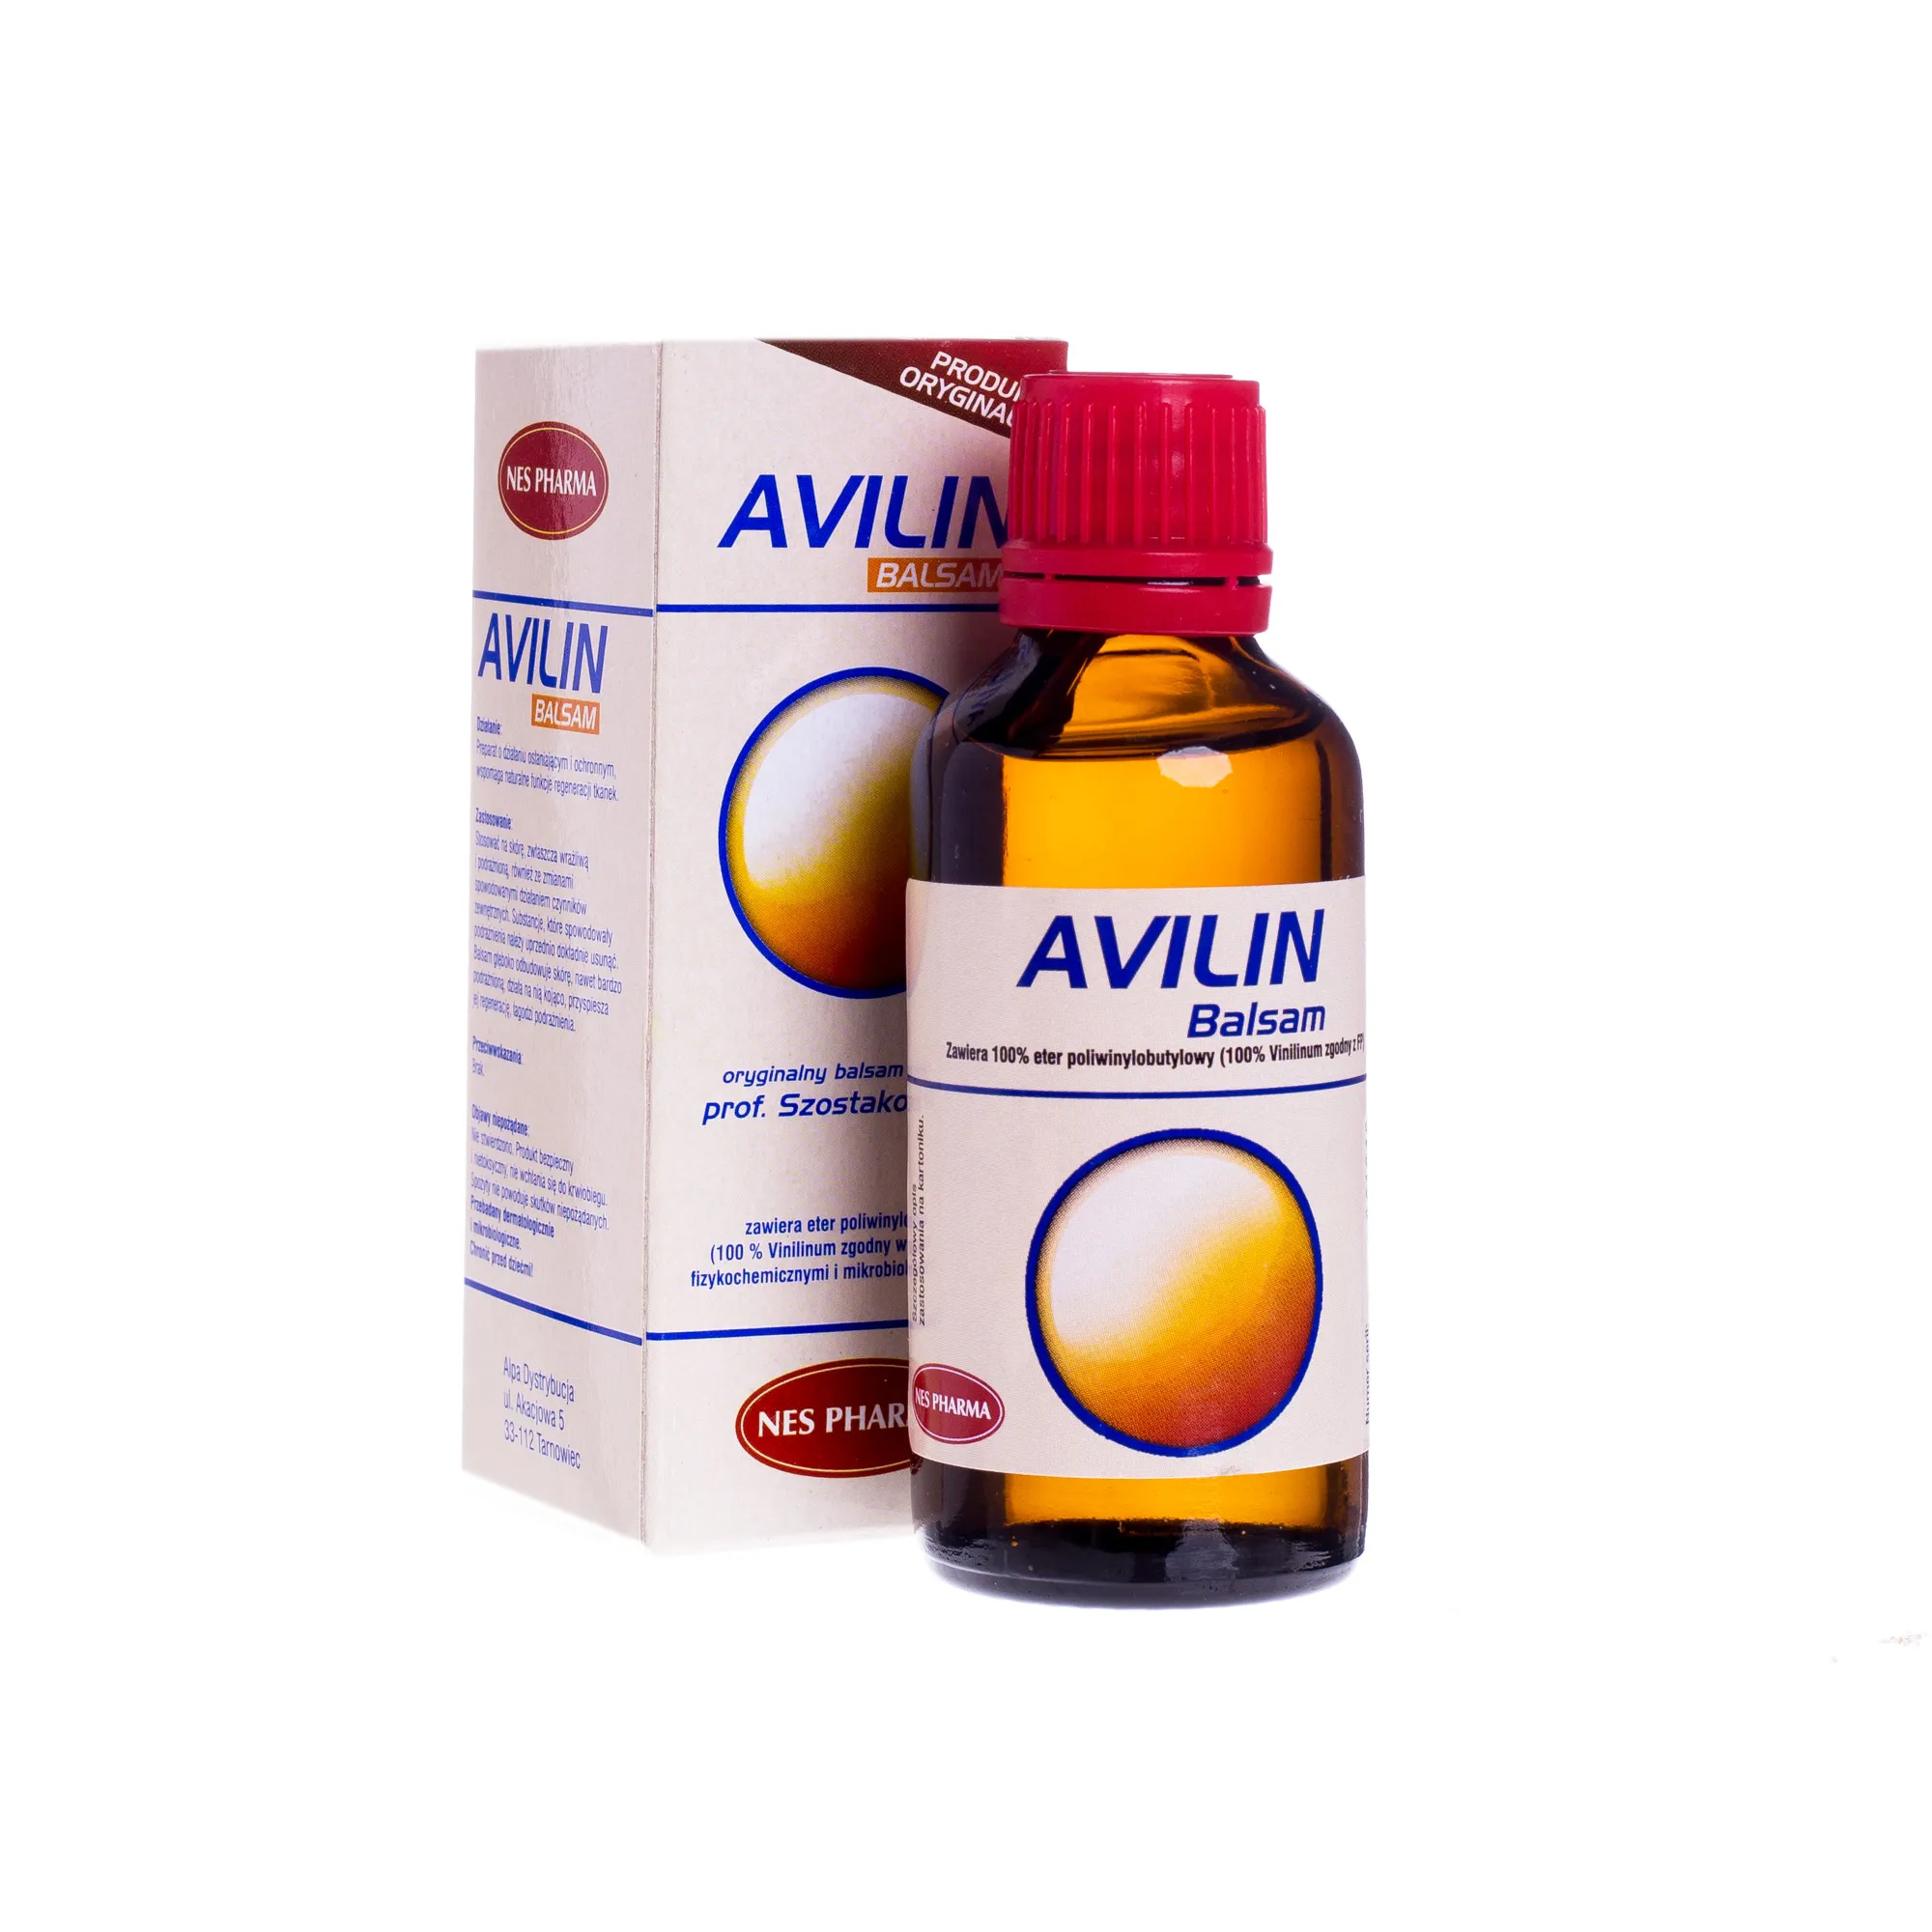 Avilin Balsam, oryginalny balsam receptury prof. Szostakowskiego, 50 ml 